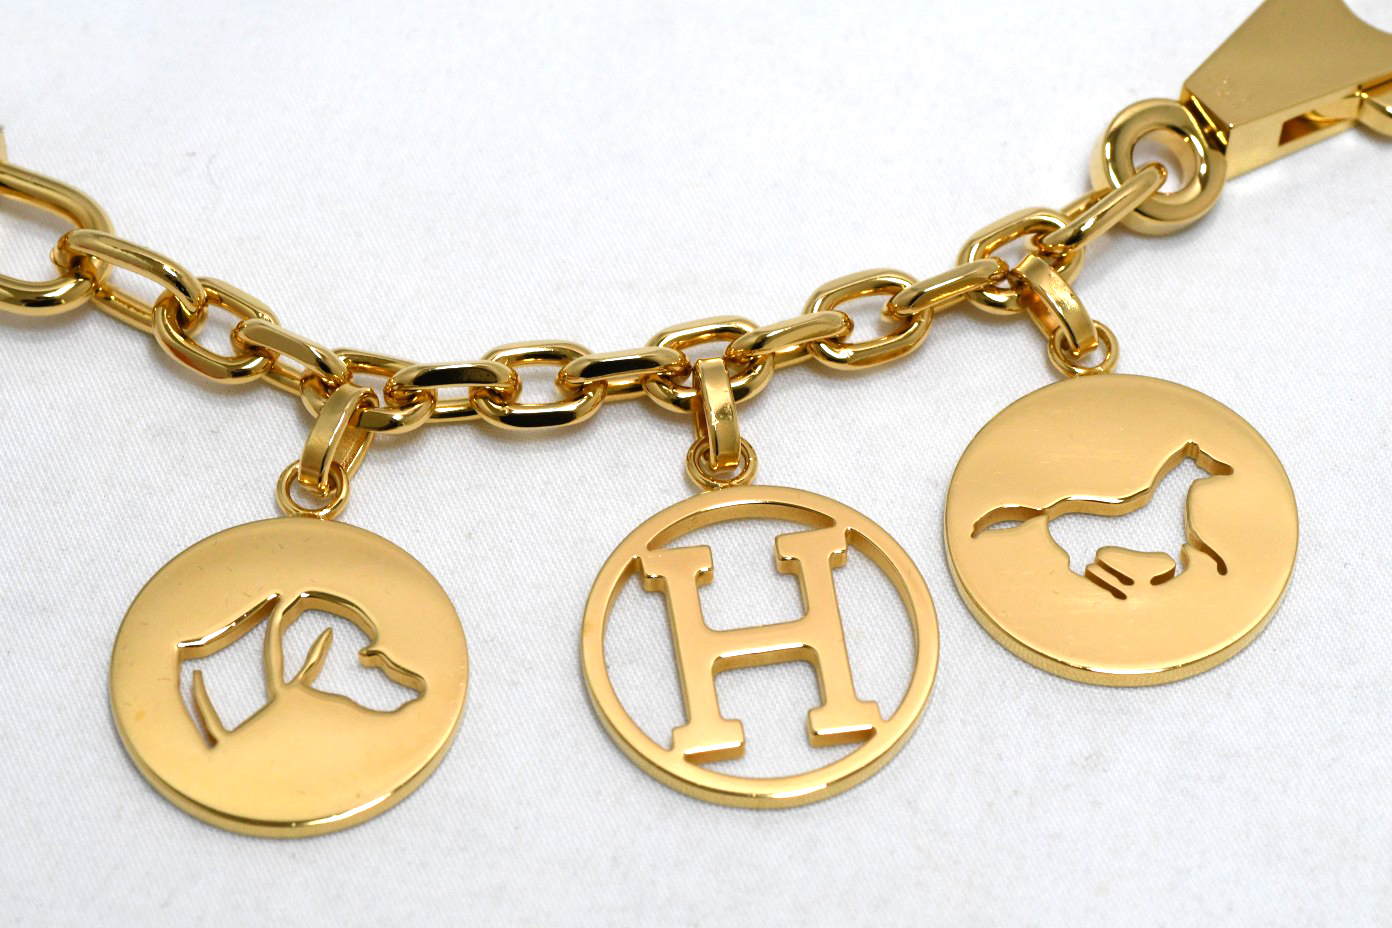 Hermes Breloque Olga Bag Charm Gold Limited Edition New w/Box